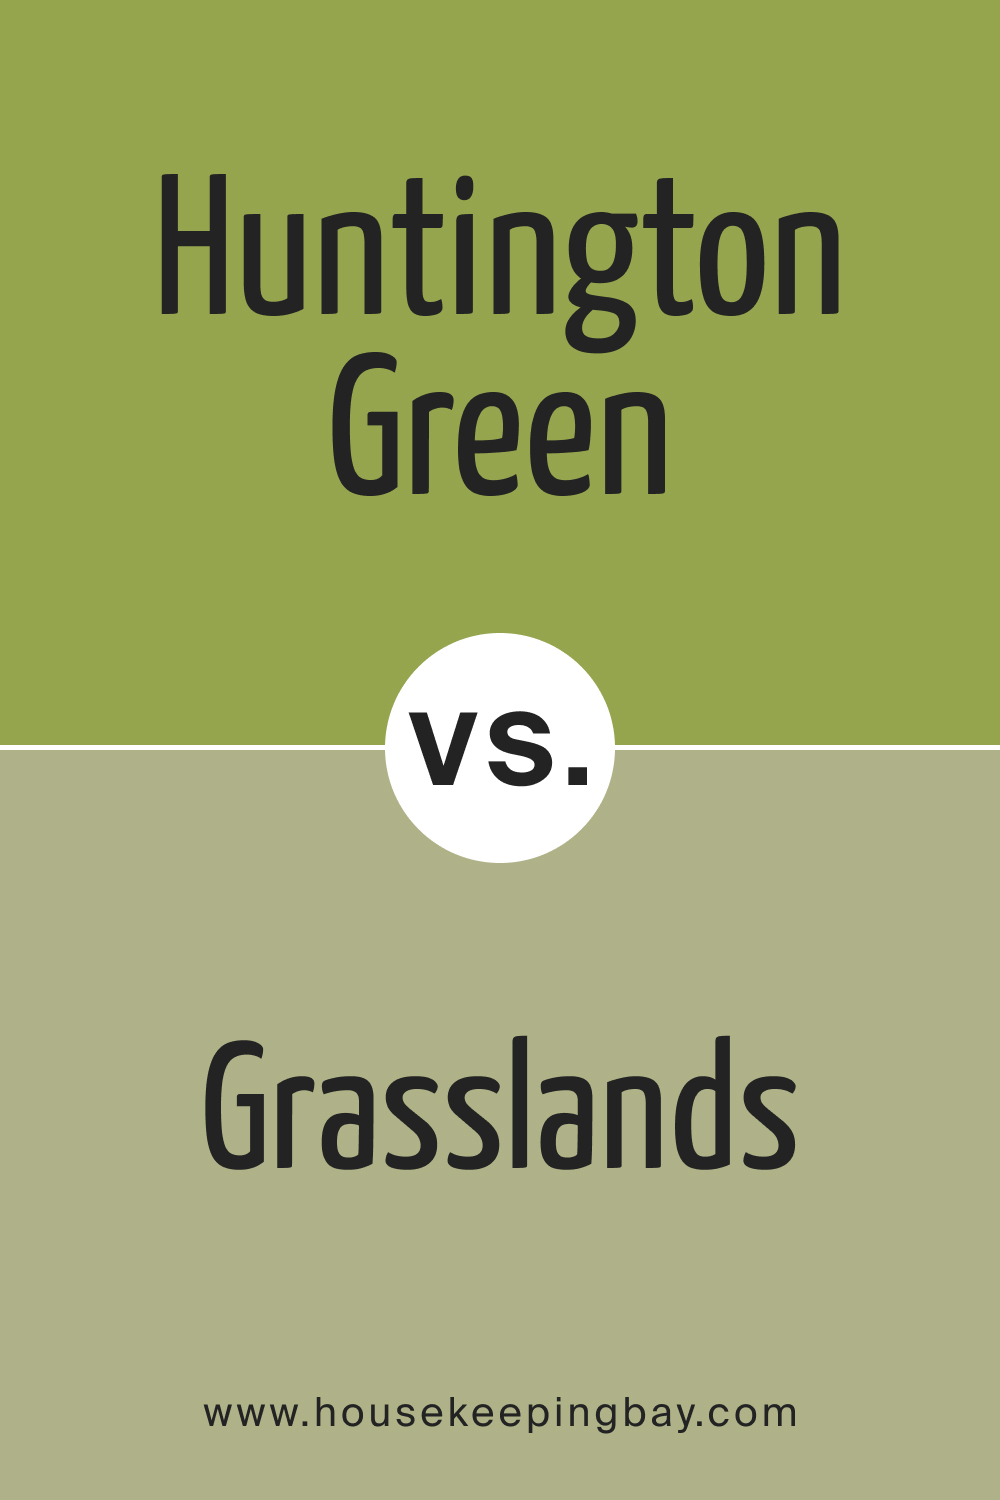 Huntington Green 406 vs. BM 502 Grasslands